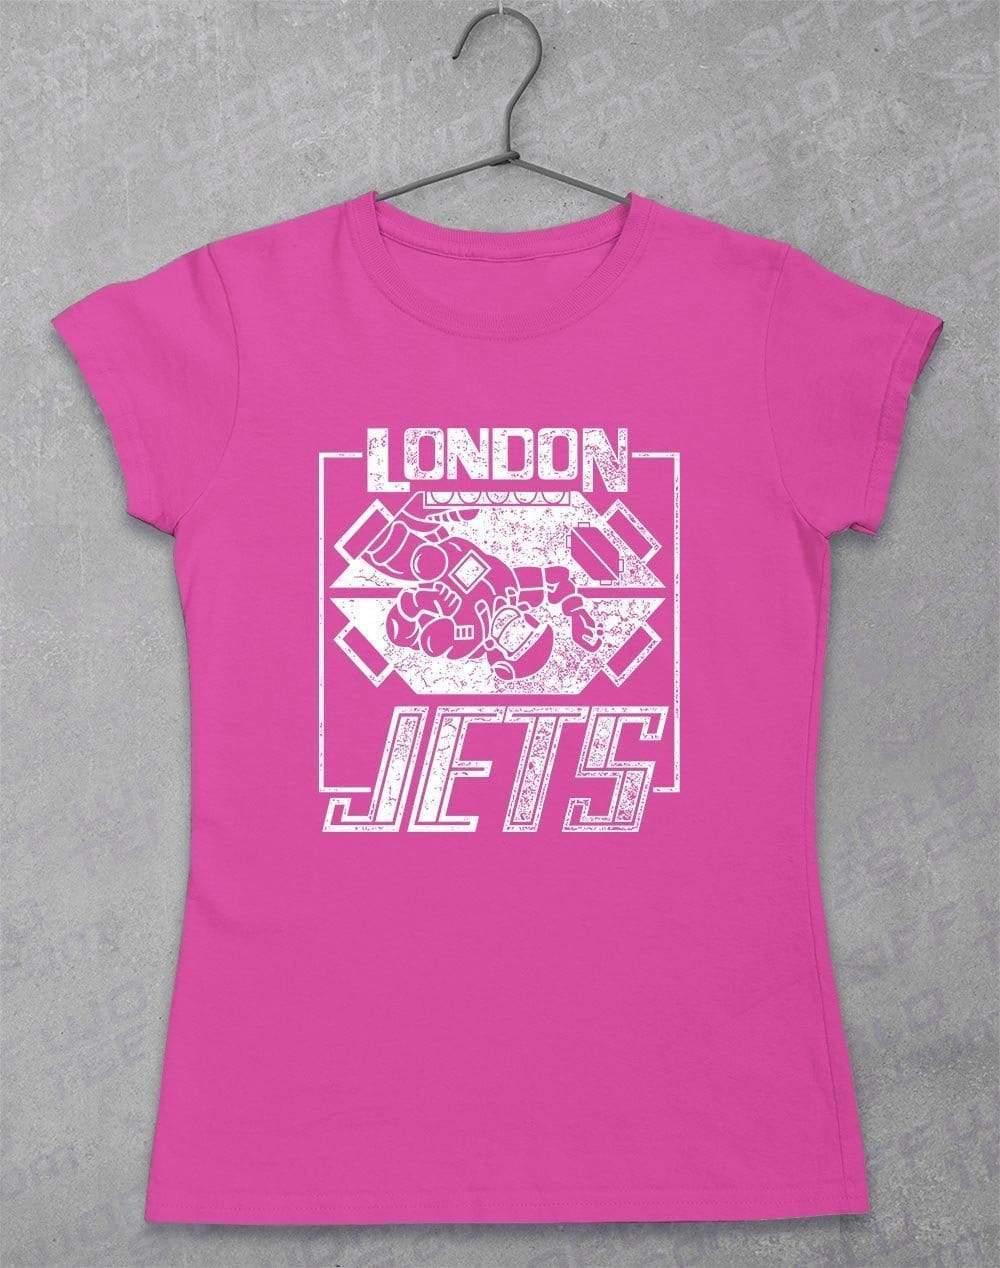 pink jets shirt